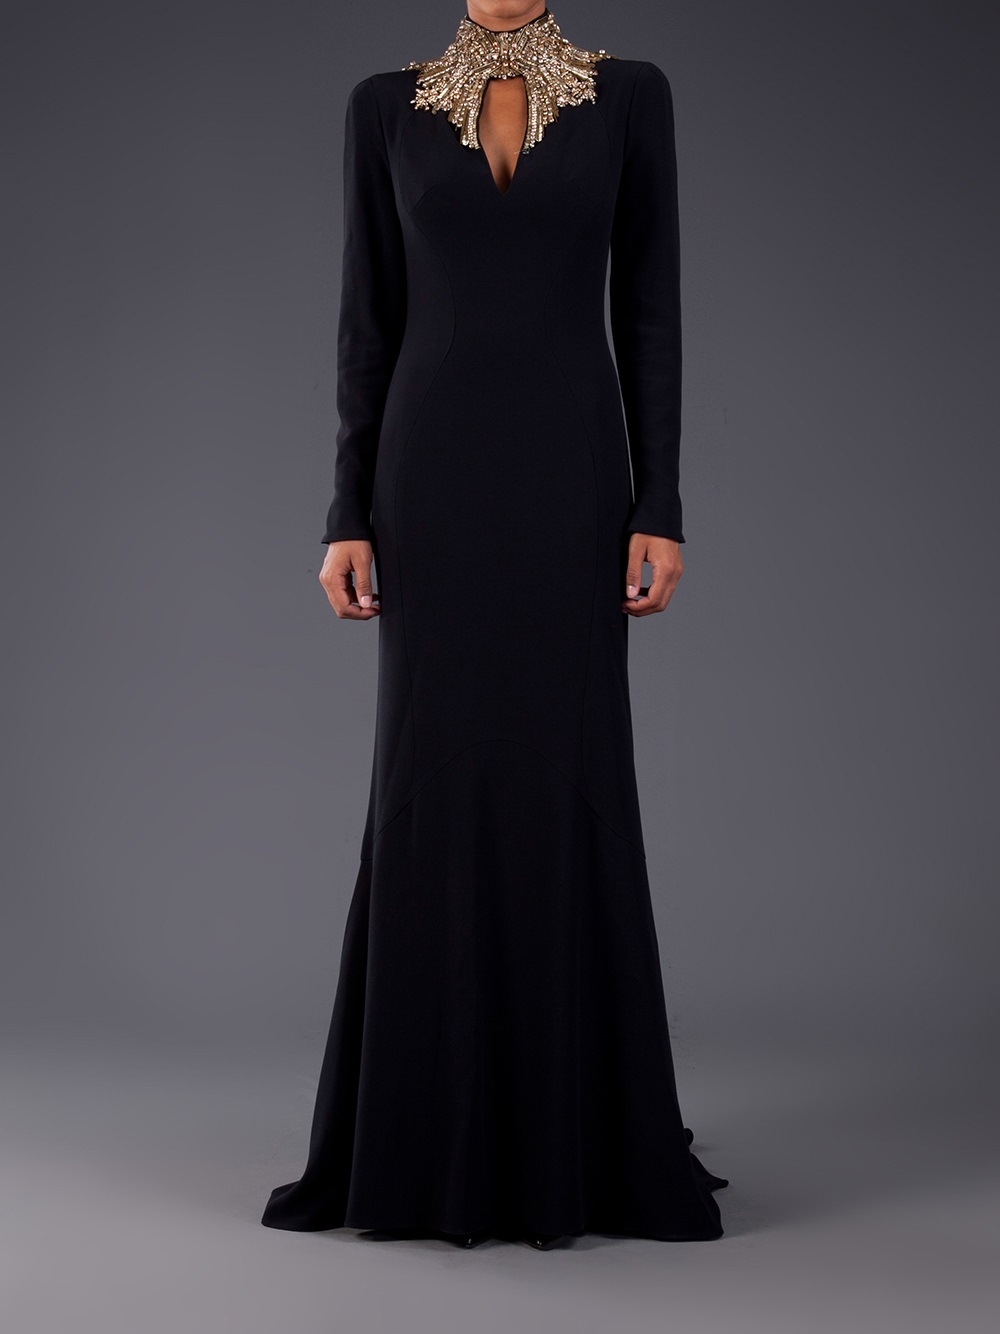 Lyst - Alexander McQueen Embellished High Neck Gown in Black